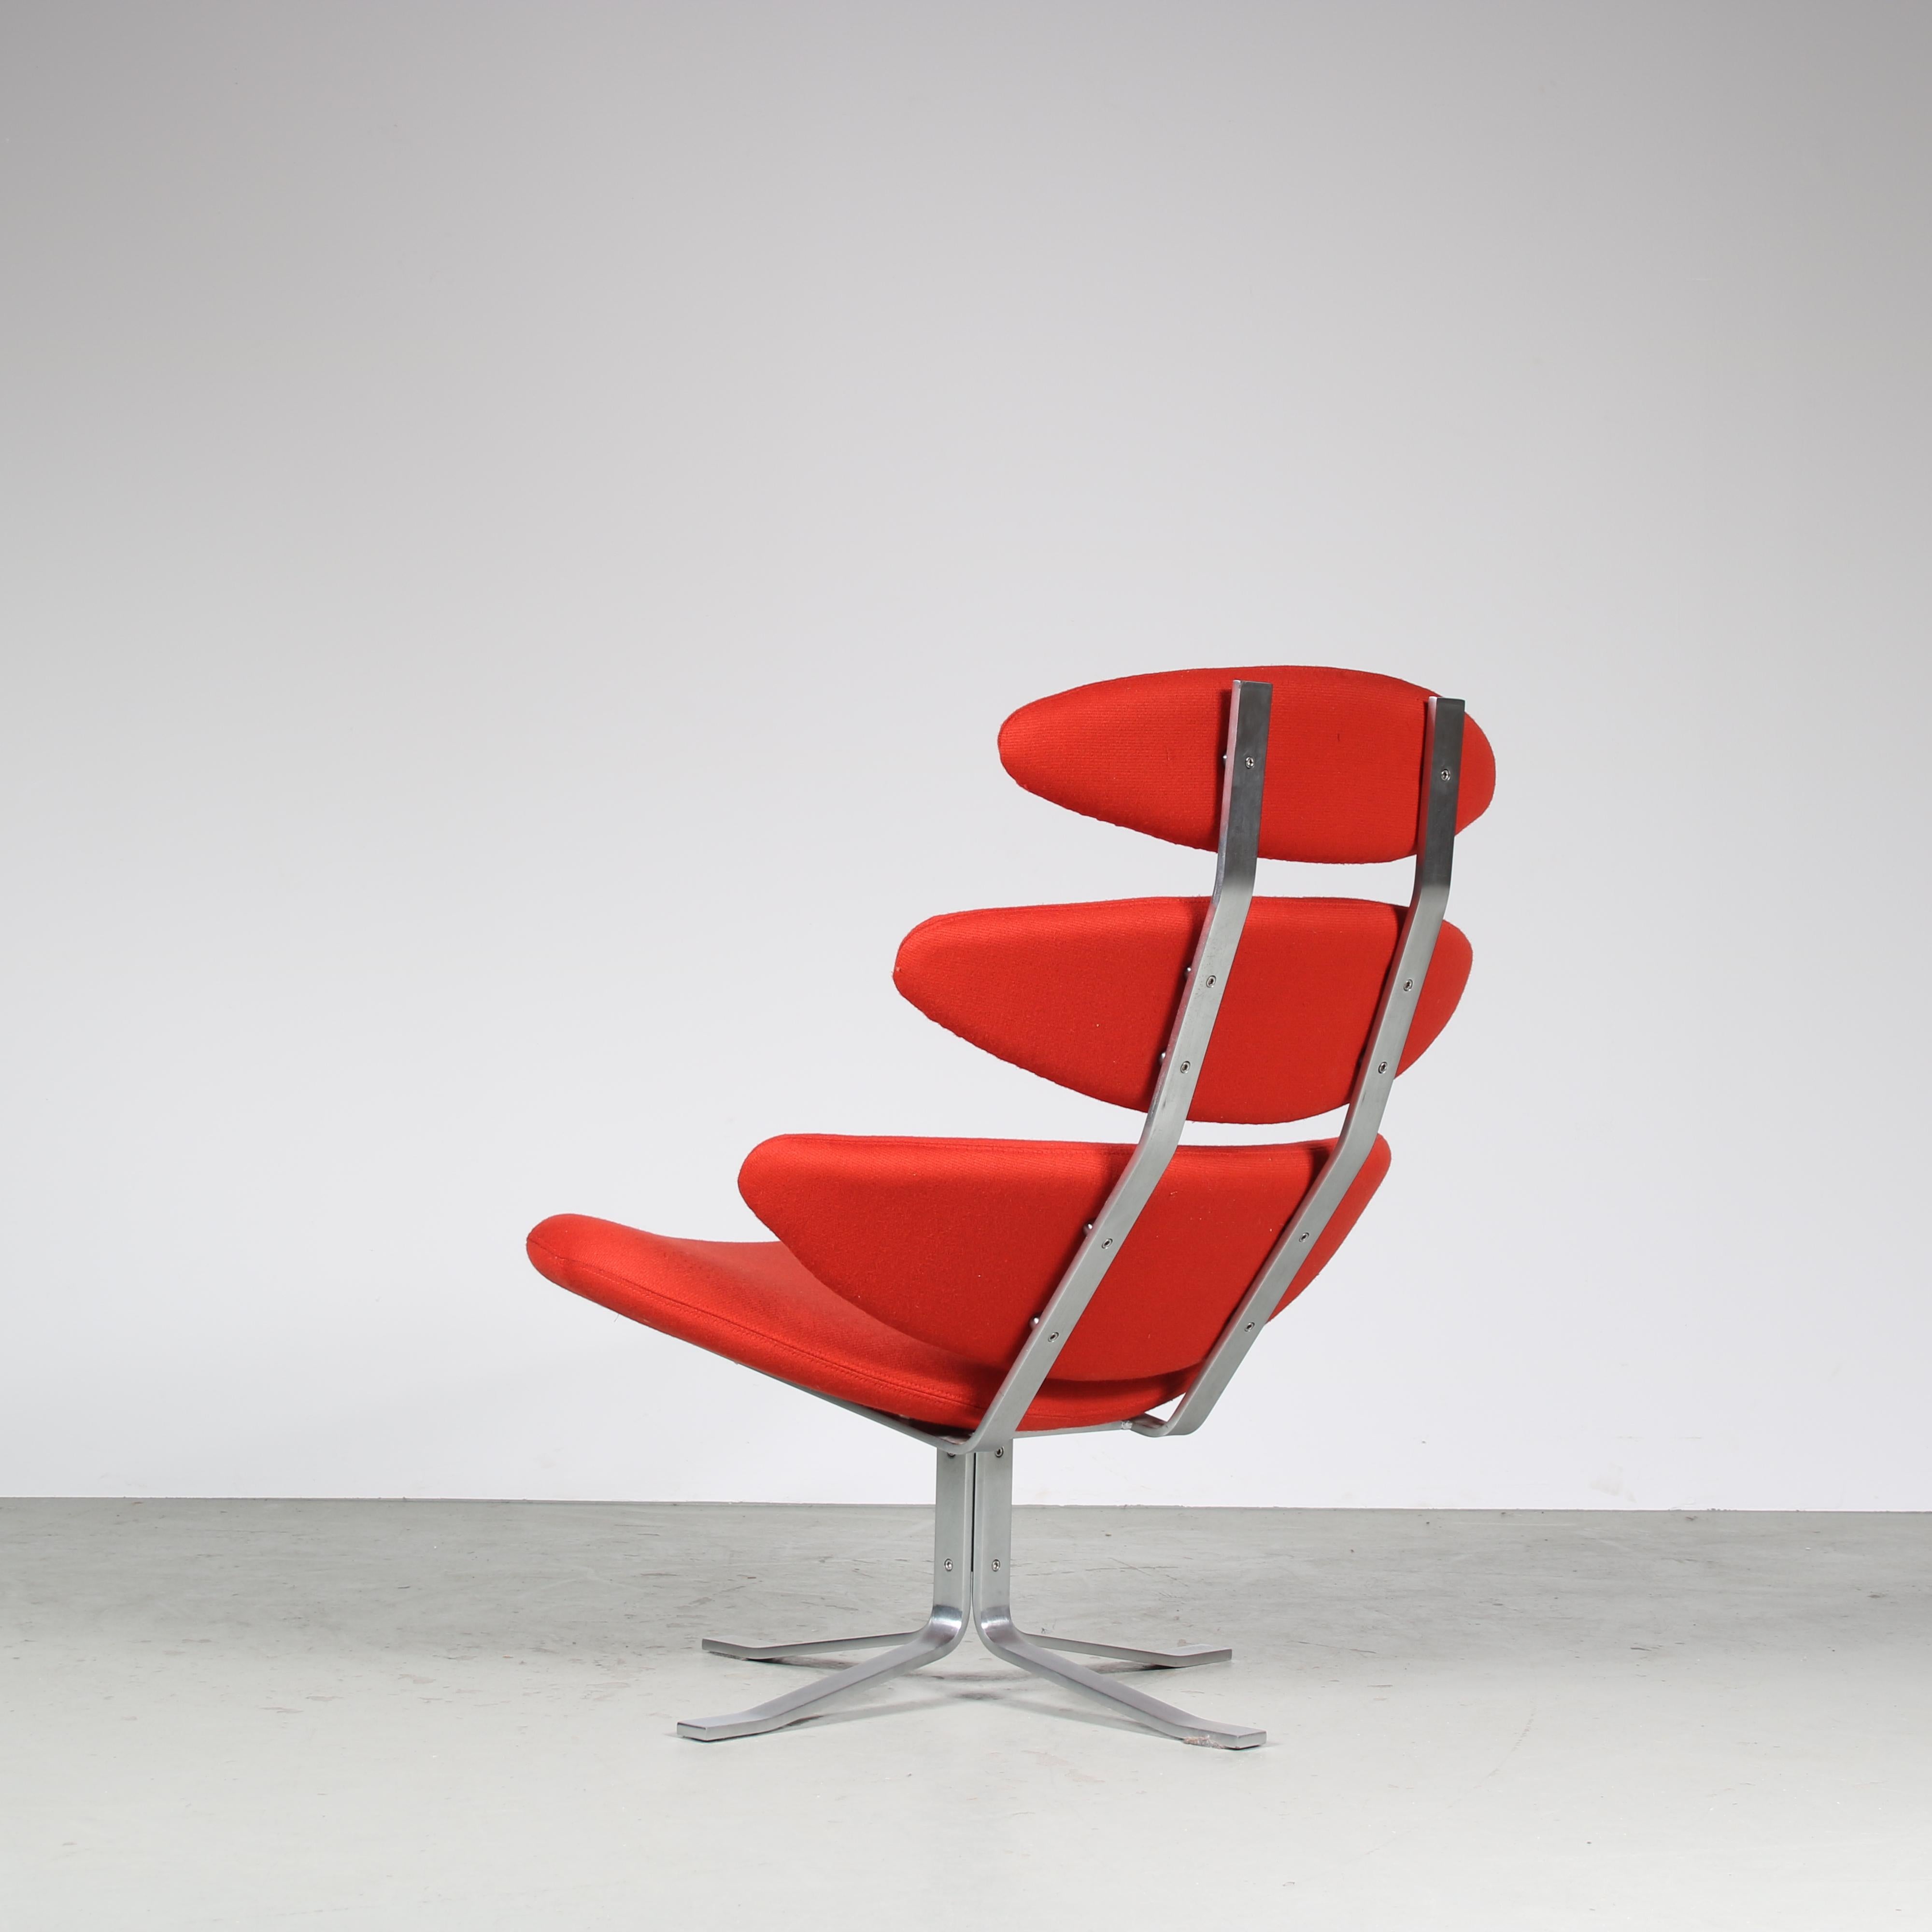 Mid-20th Century “Corona” Chair by Poul Volther for Erik Jørgensen Møbelfabrik, Denmark 1960 For Sale